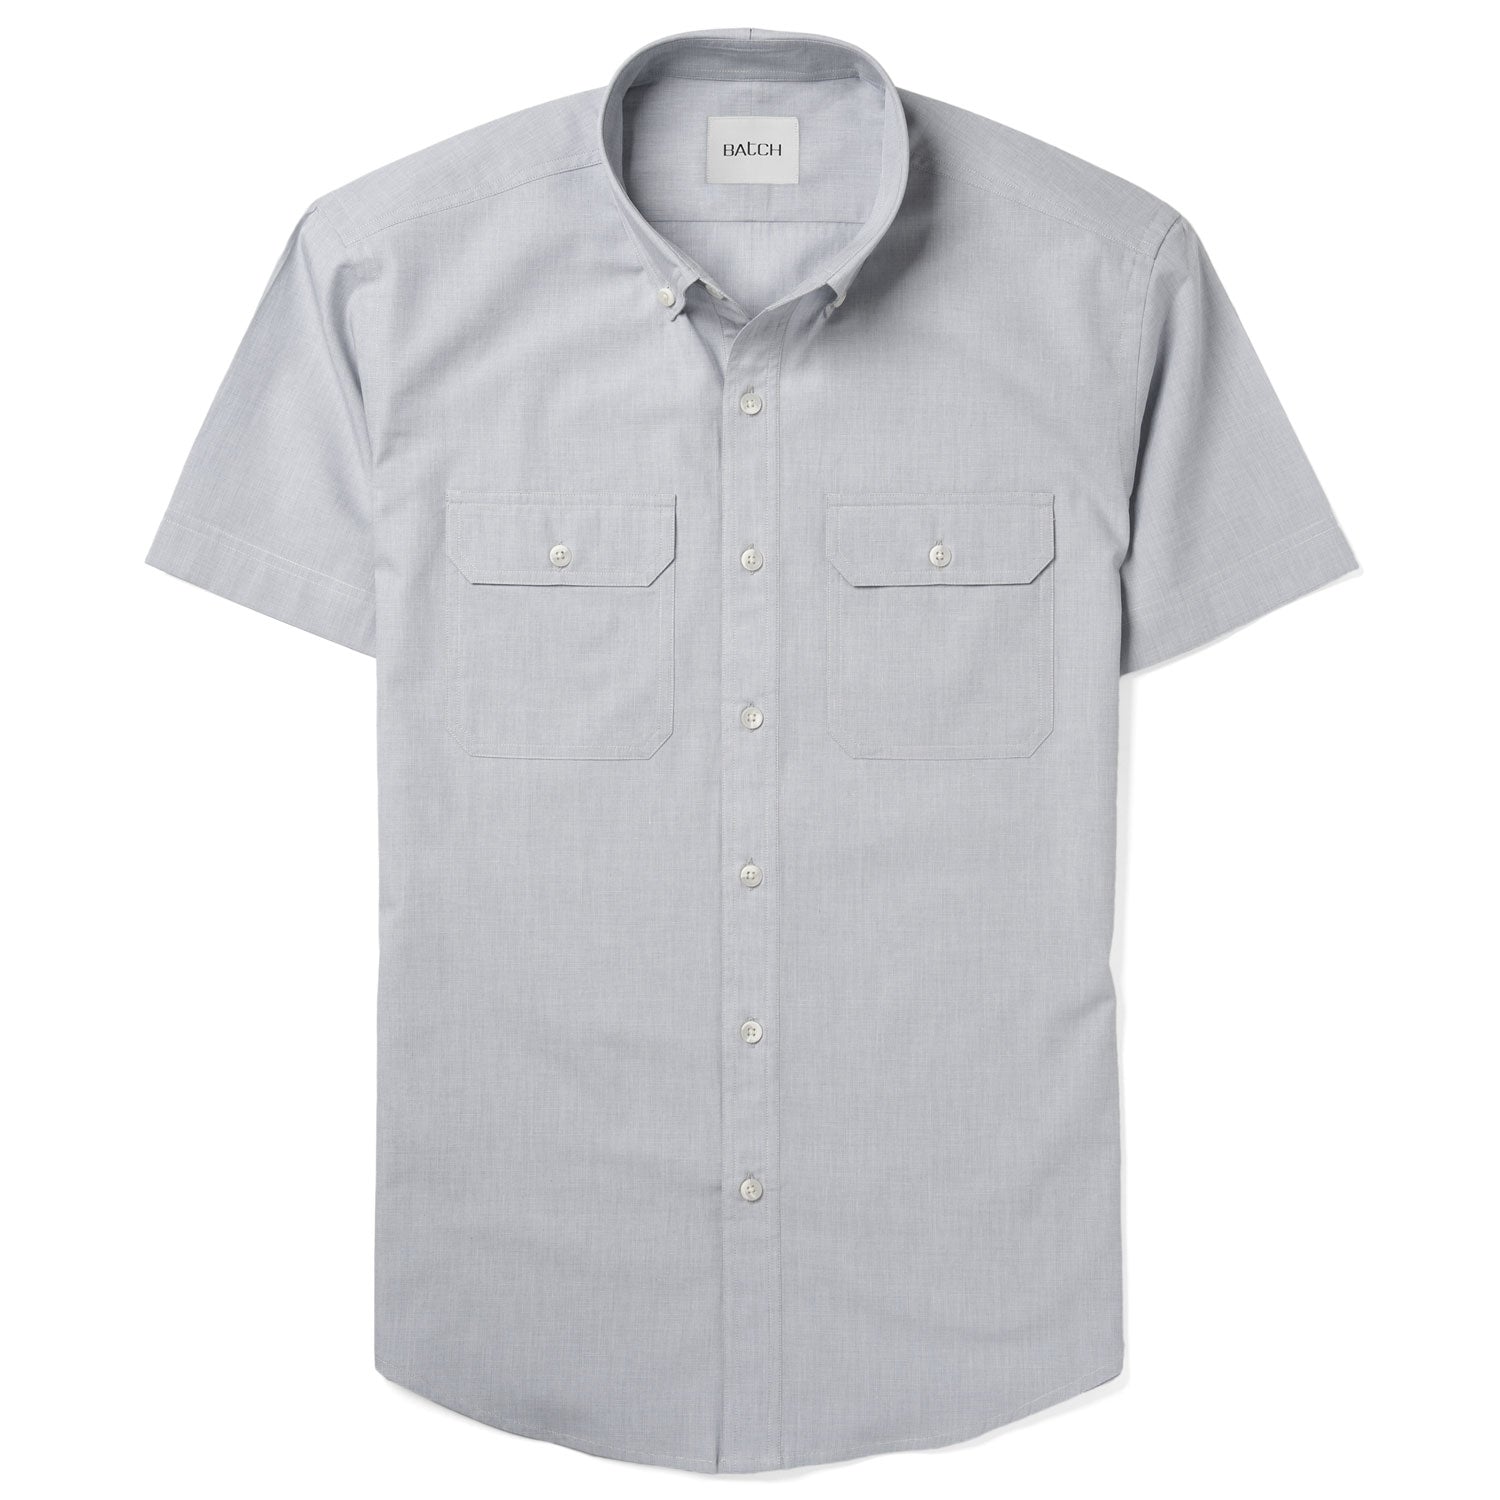 Men's Utility Shirt - Short Sleeve Constructor in Light Gray Cotton | Batch